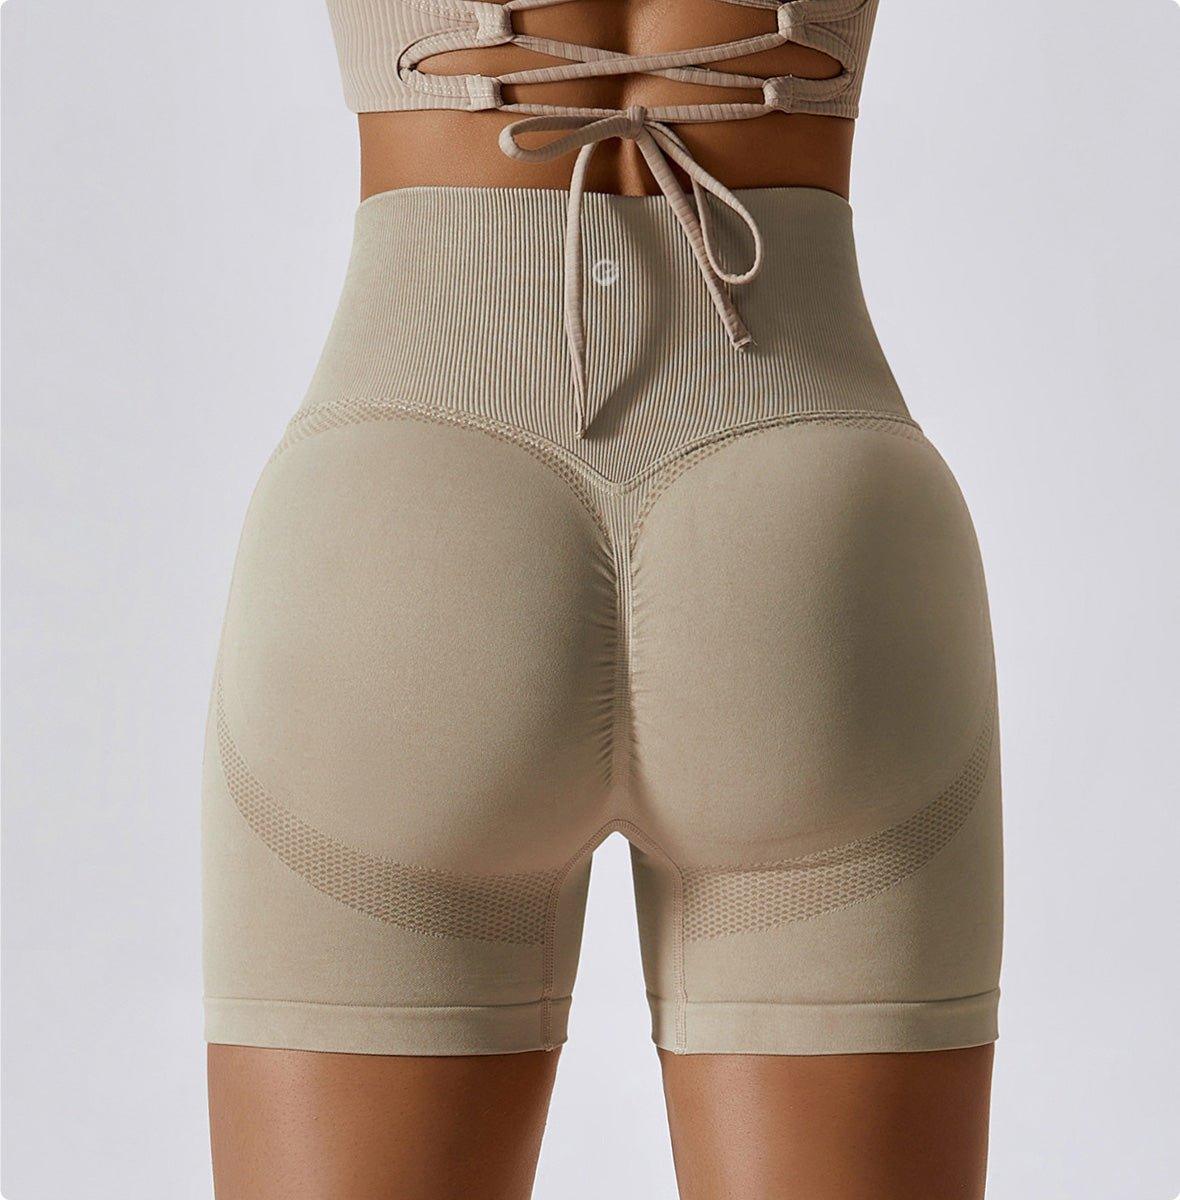 GFIT® Yoga Shorts High Waist Fitness Pants - GFIT SPORTS